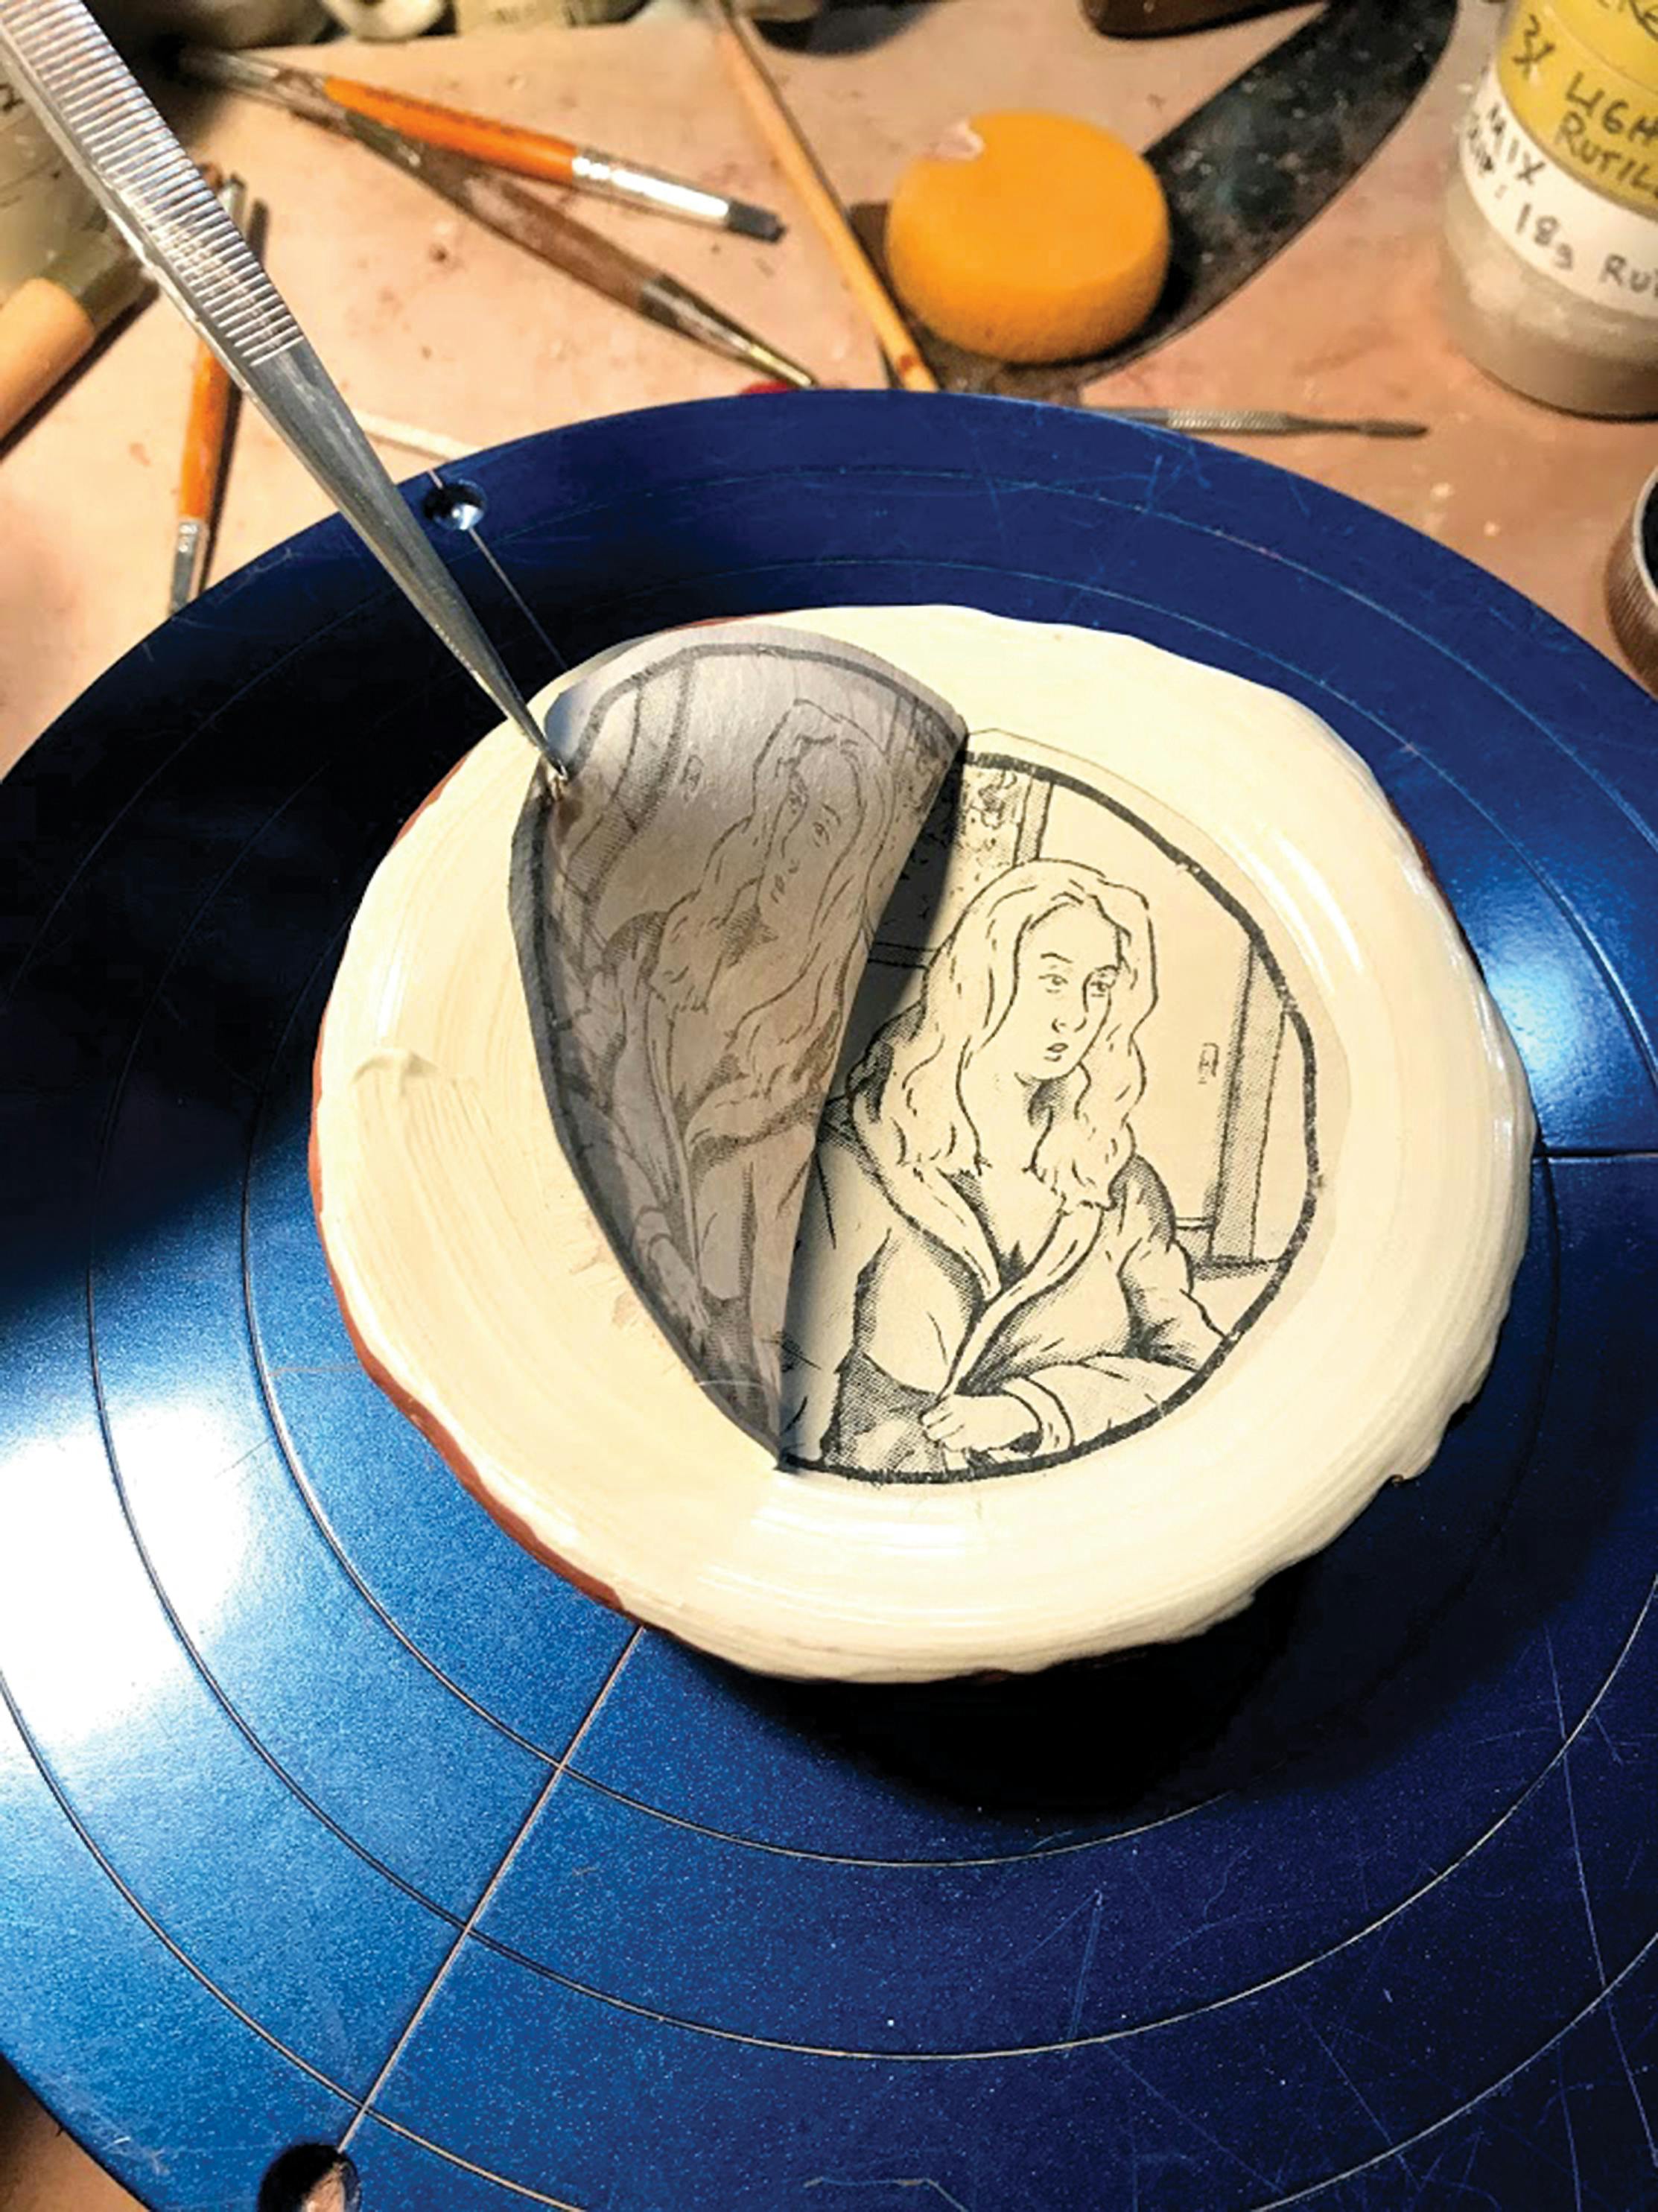 Ian Petrie process illustration on clay